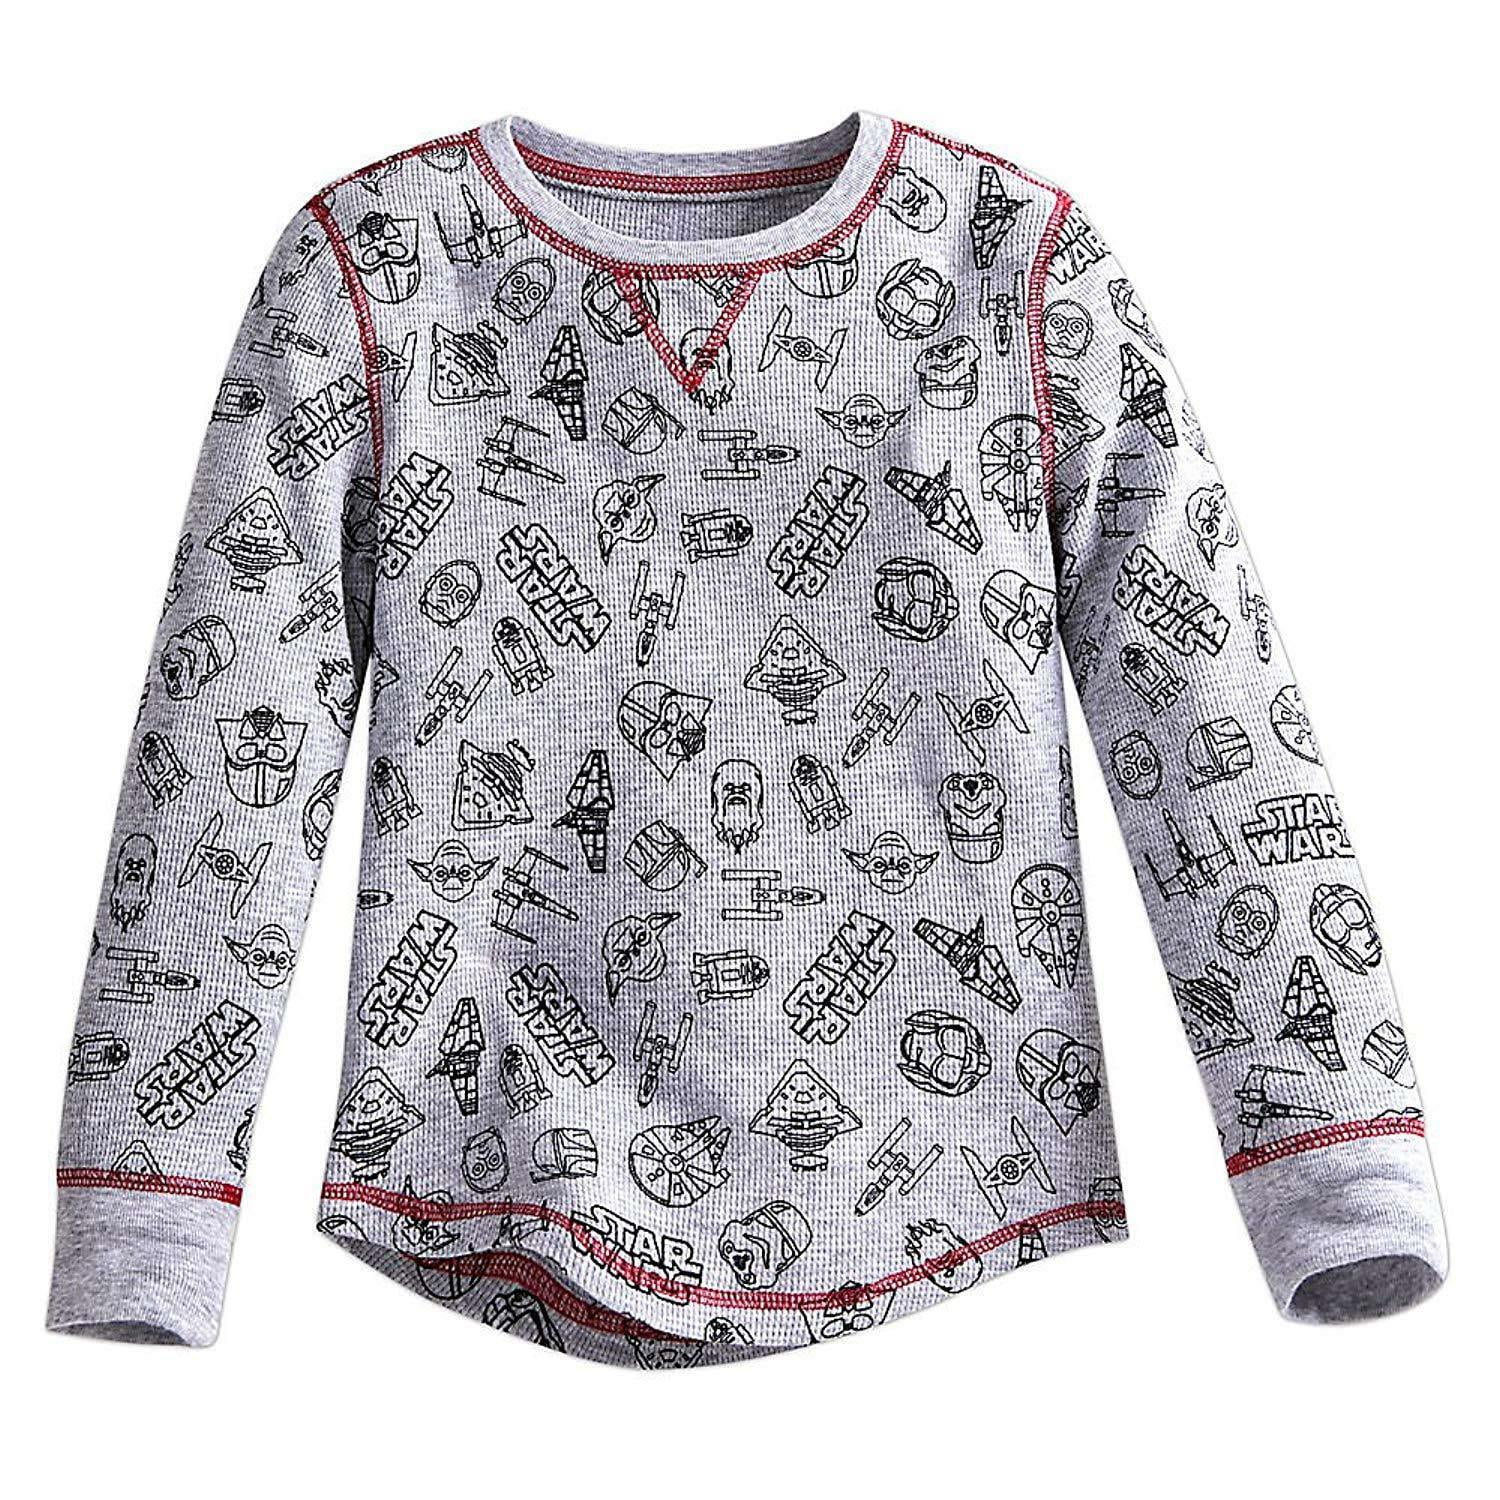 Disney Store Star Wars Long Sleeve Thermal Shirt Boy Size 7/8 